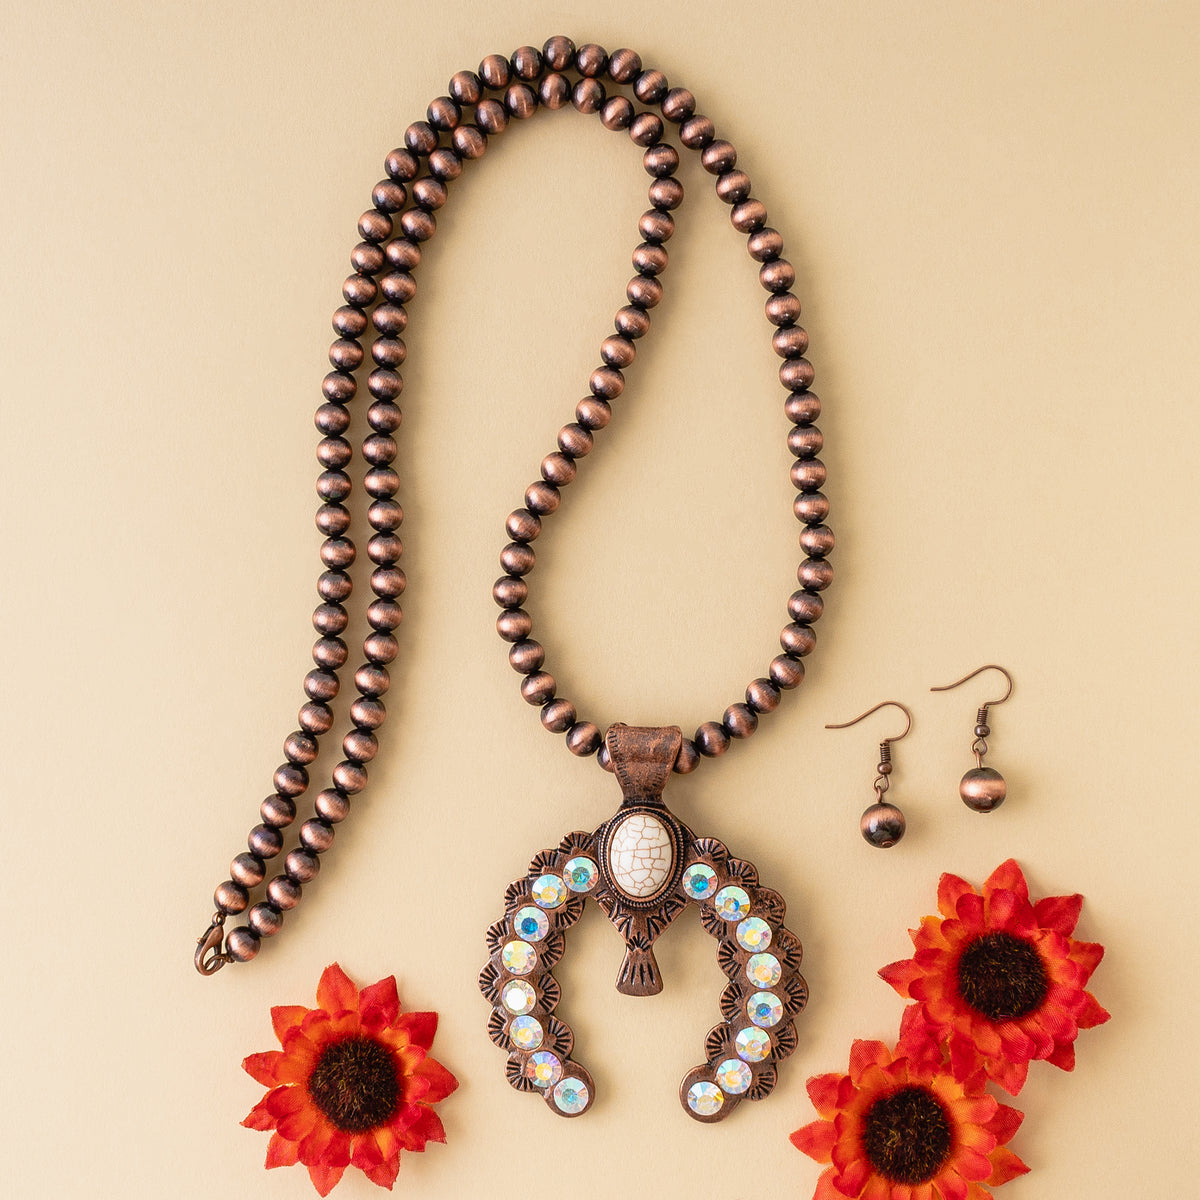 72696 - Thunderbird Necklace - Ivory & Copper - Fashion Jewelry Wholesale